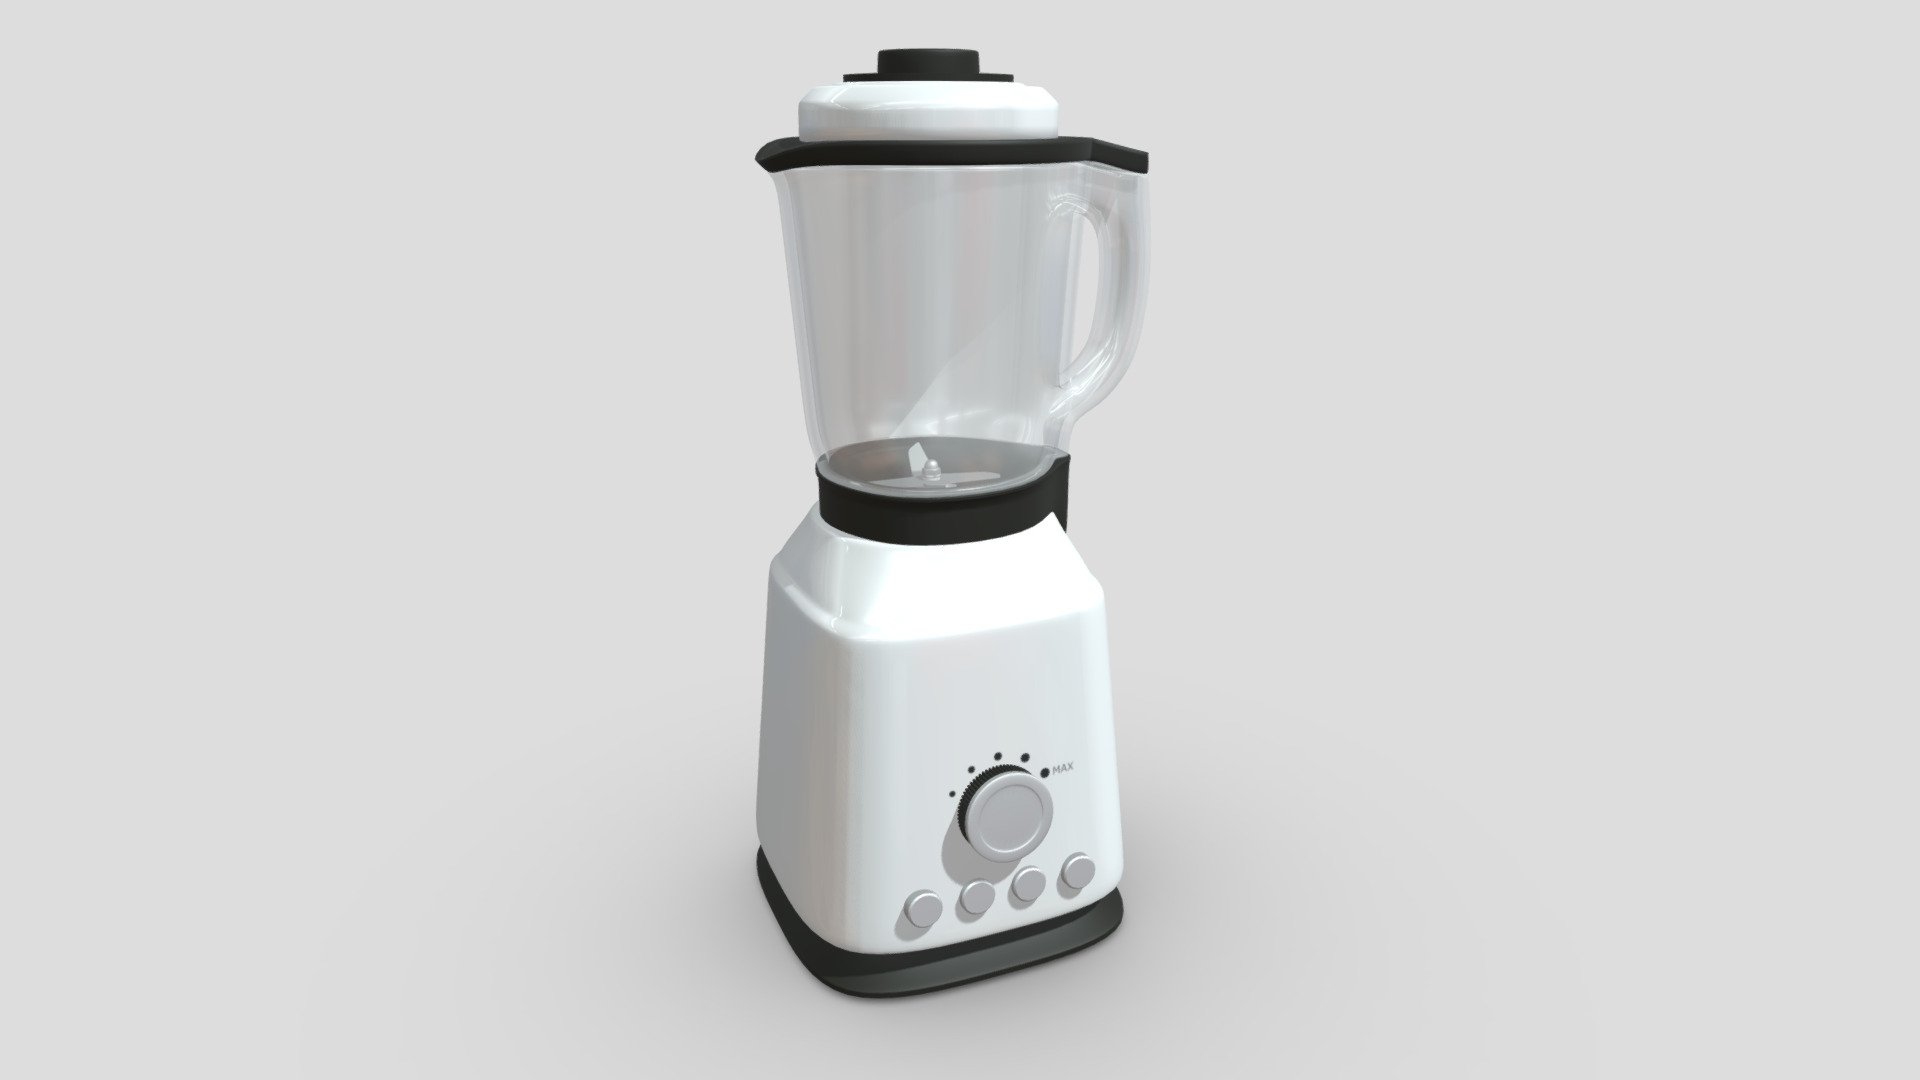 unbranded low poly 3d model of blender / food processor - Blender - Buy Royalty Free 3D model by assetfactory 3d model